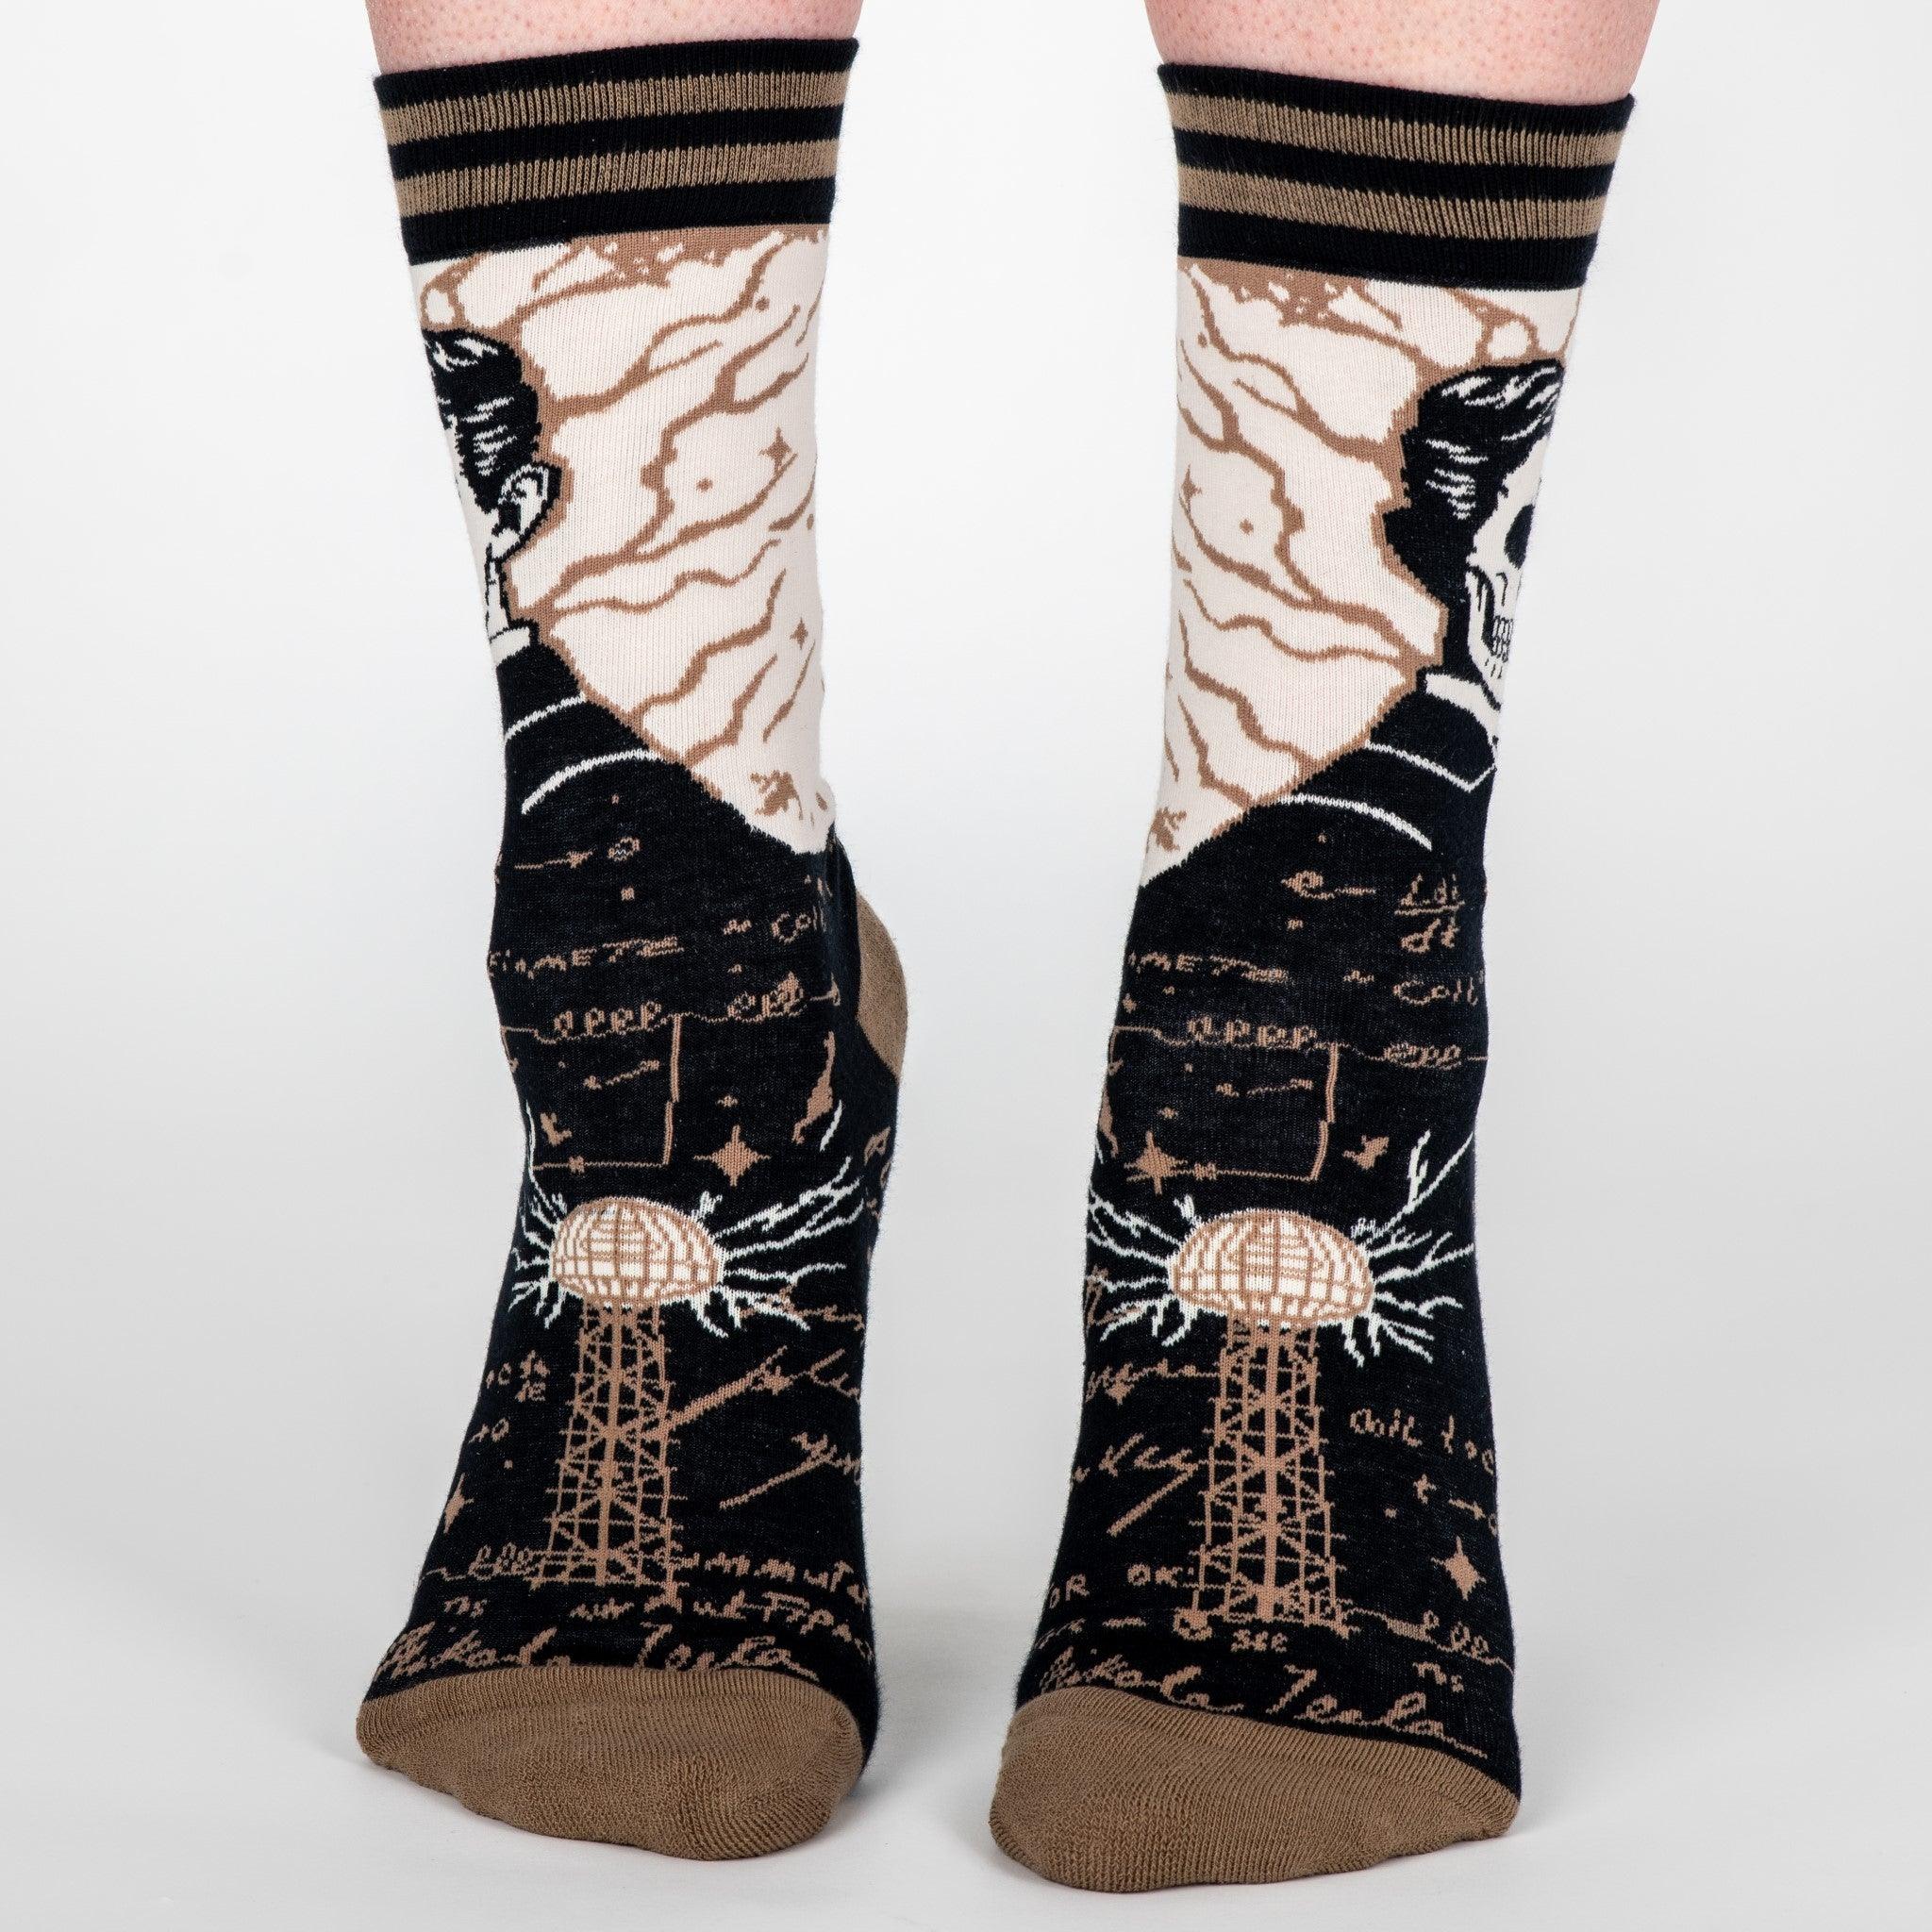 Nikola Tesla Crew Socks | FootClothes | Socks | 1401